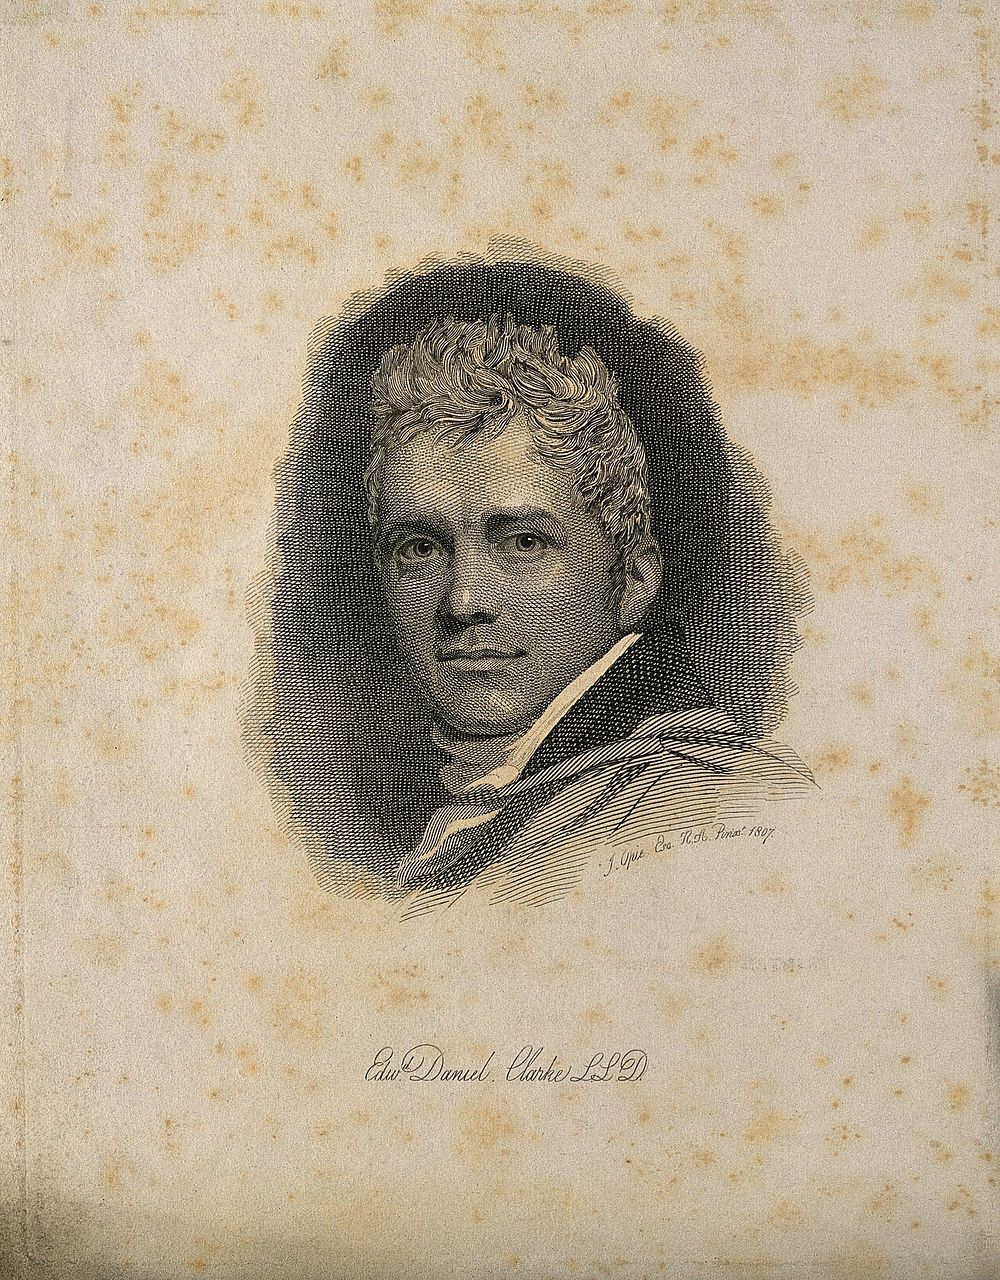 Edward Daniel Clarke. Line engraving by Mrs D. Turner, 1824, after J. Opie, 1807.